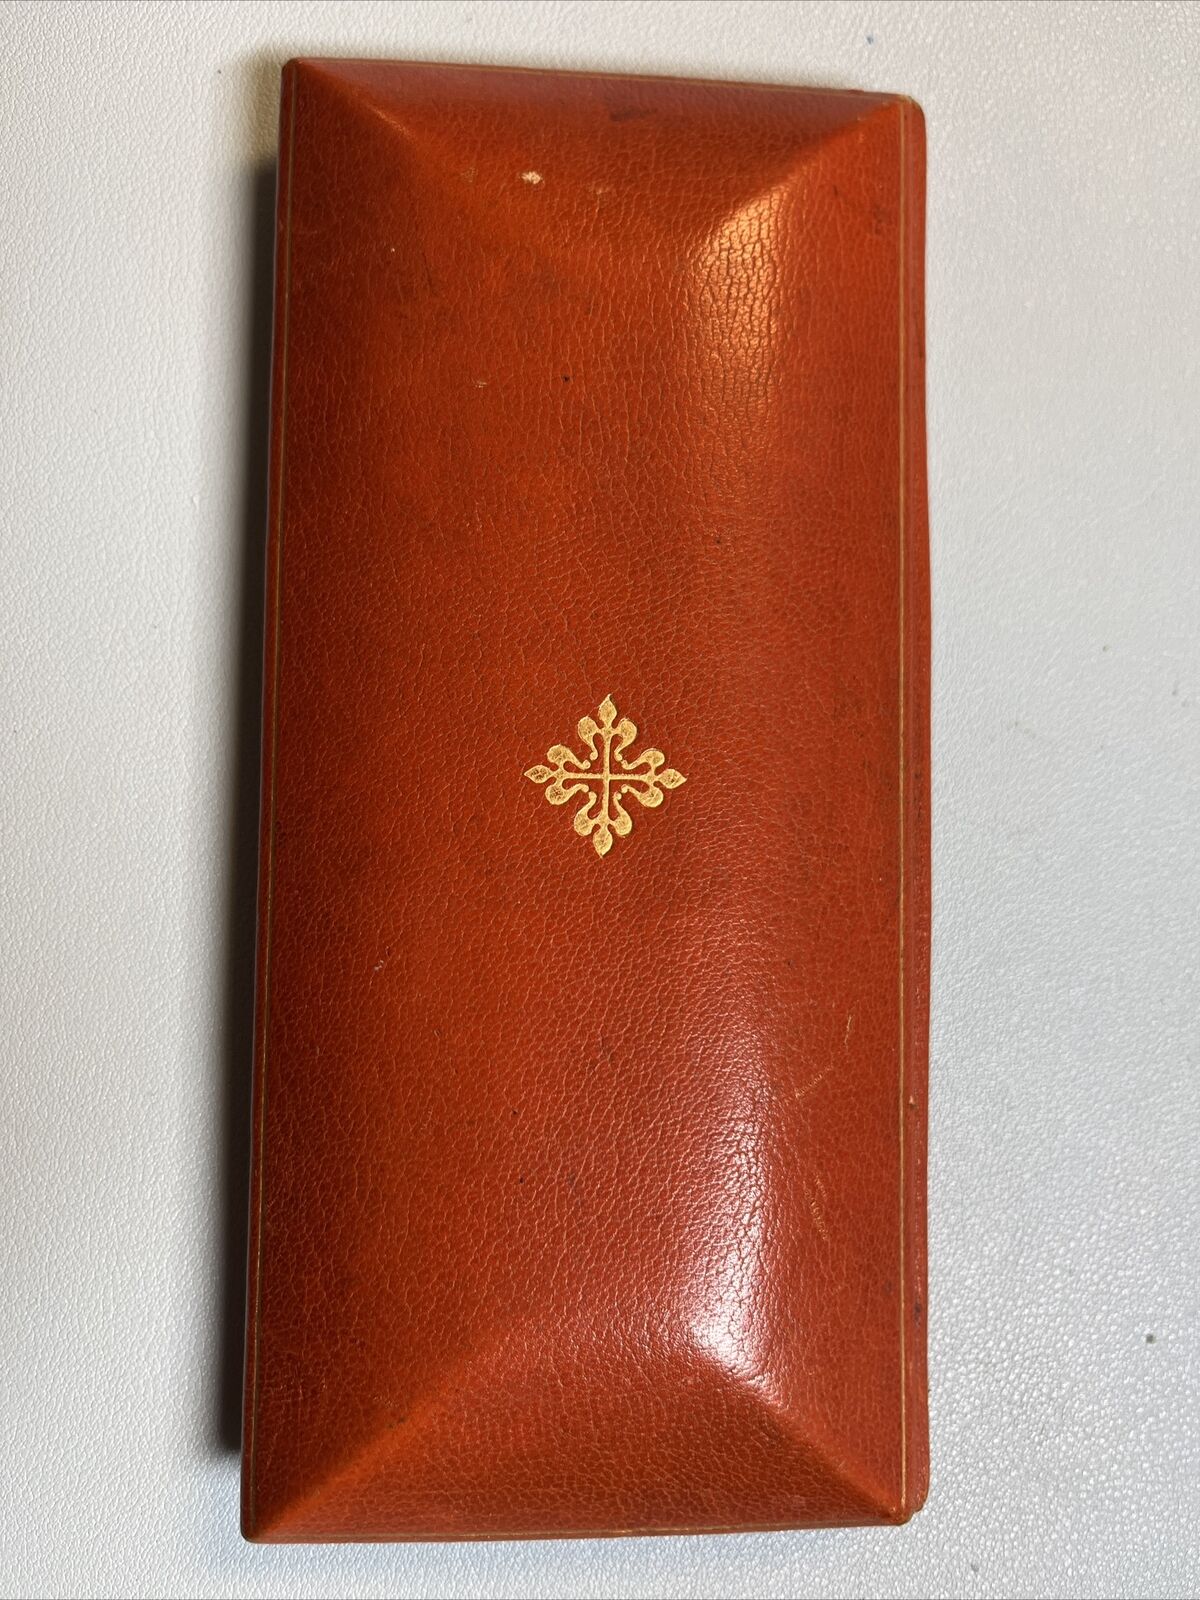 Original Vintage 1960s/70s Patek Philippe ‘Coffin” Watch Box Case (Only).Cognac